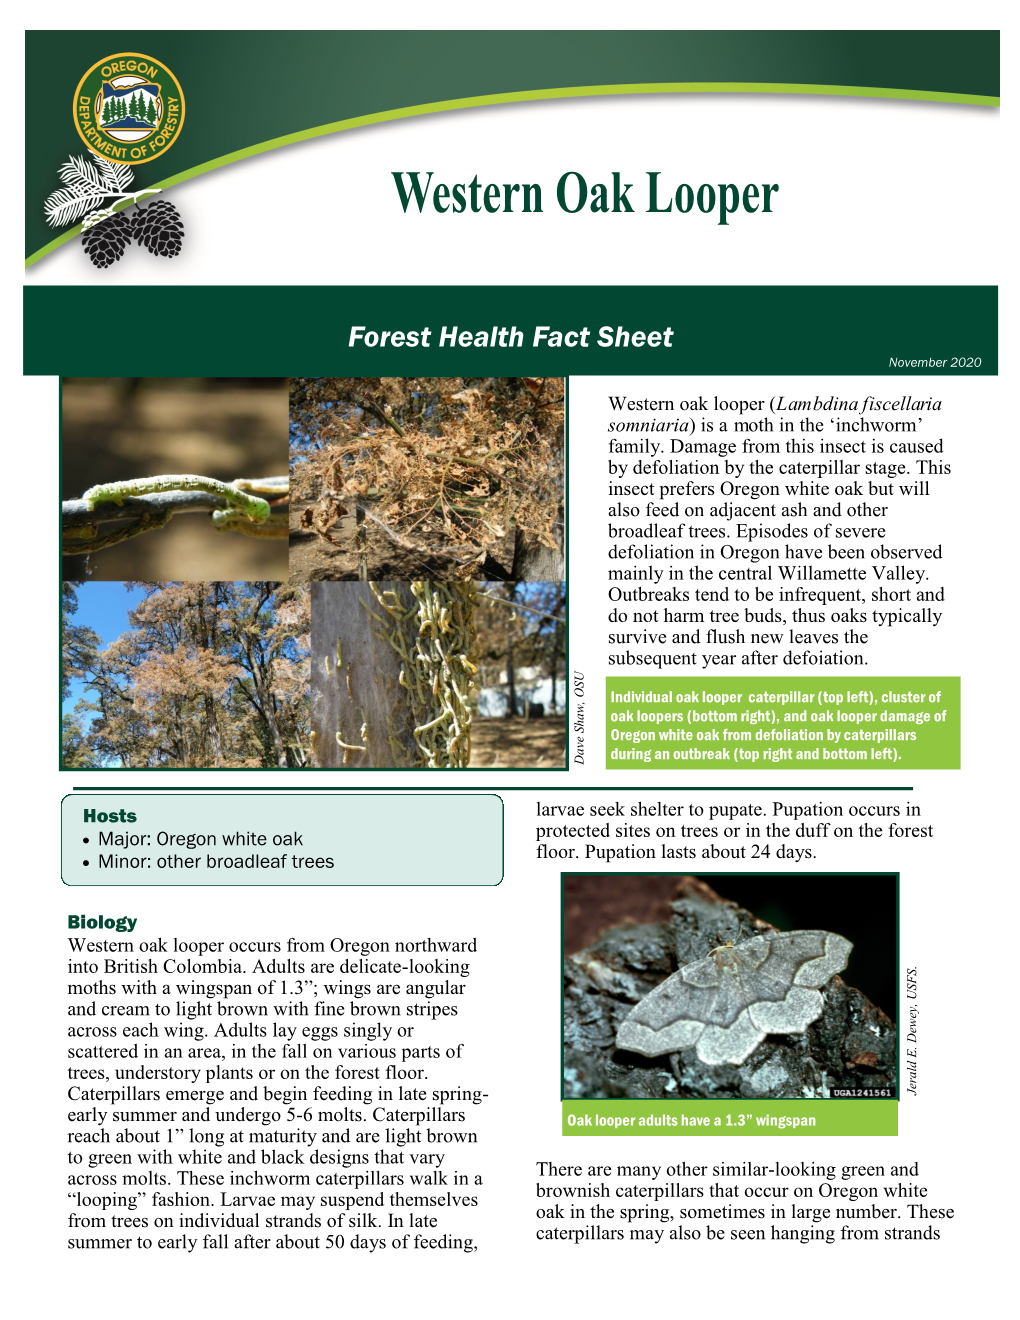 Western Oak Looper (Lambdina Fiscellaria Somniaria) Is a Moth in the ‘Inchworm’ Family